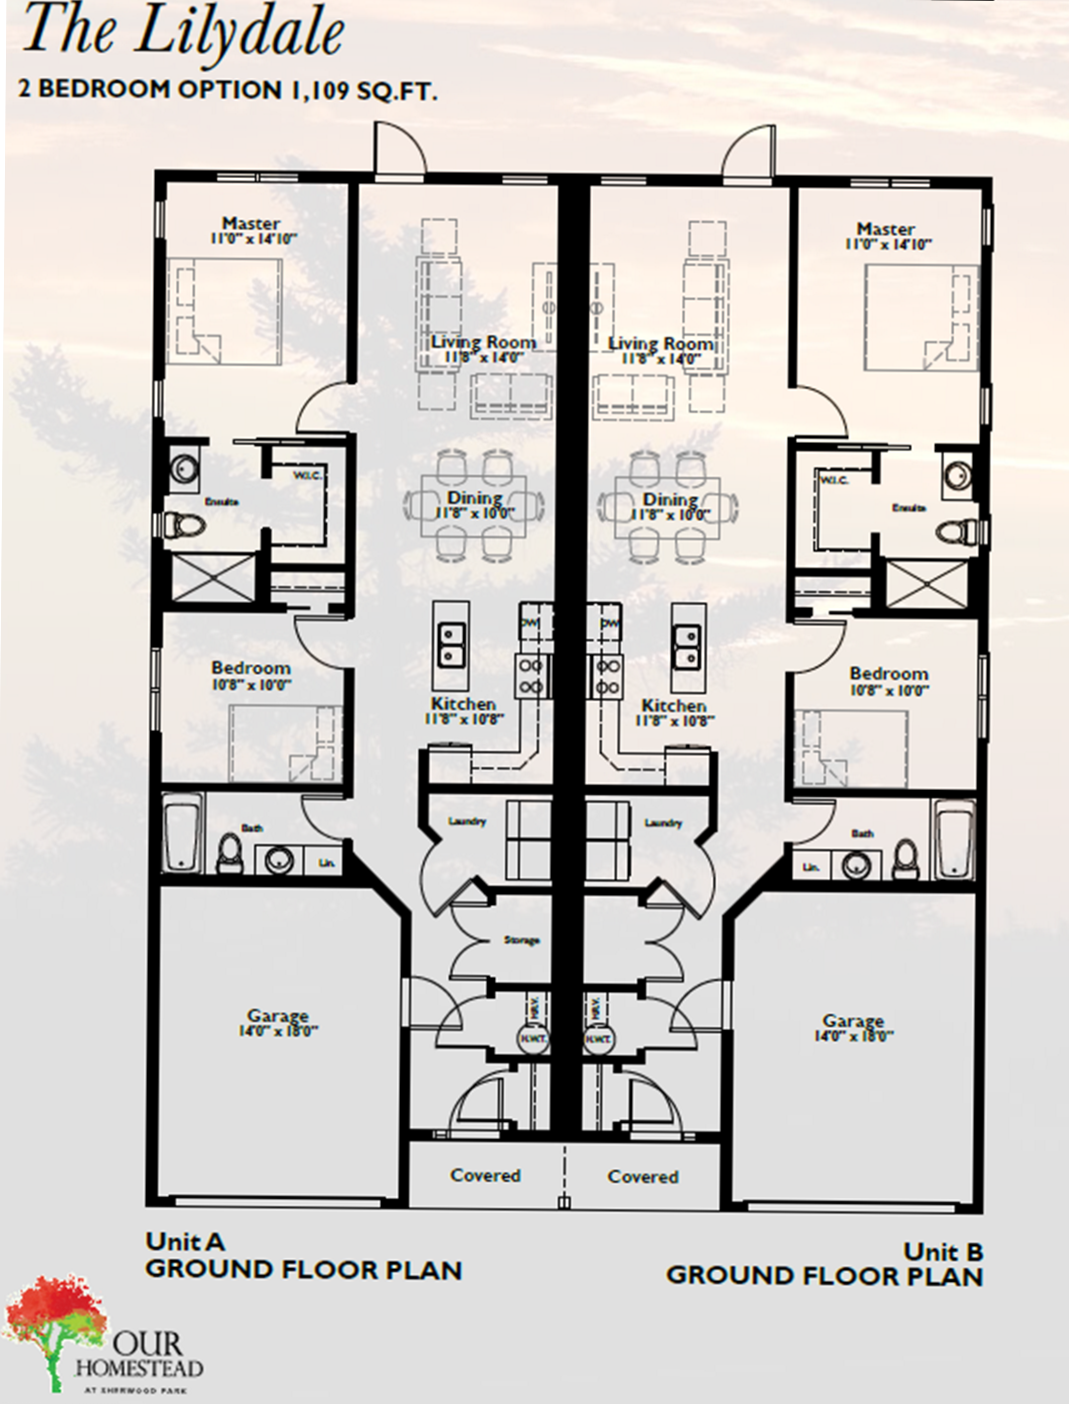 Three Bedroom Lilydale Floor Plan.png